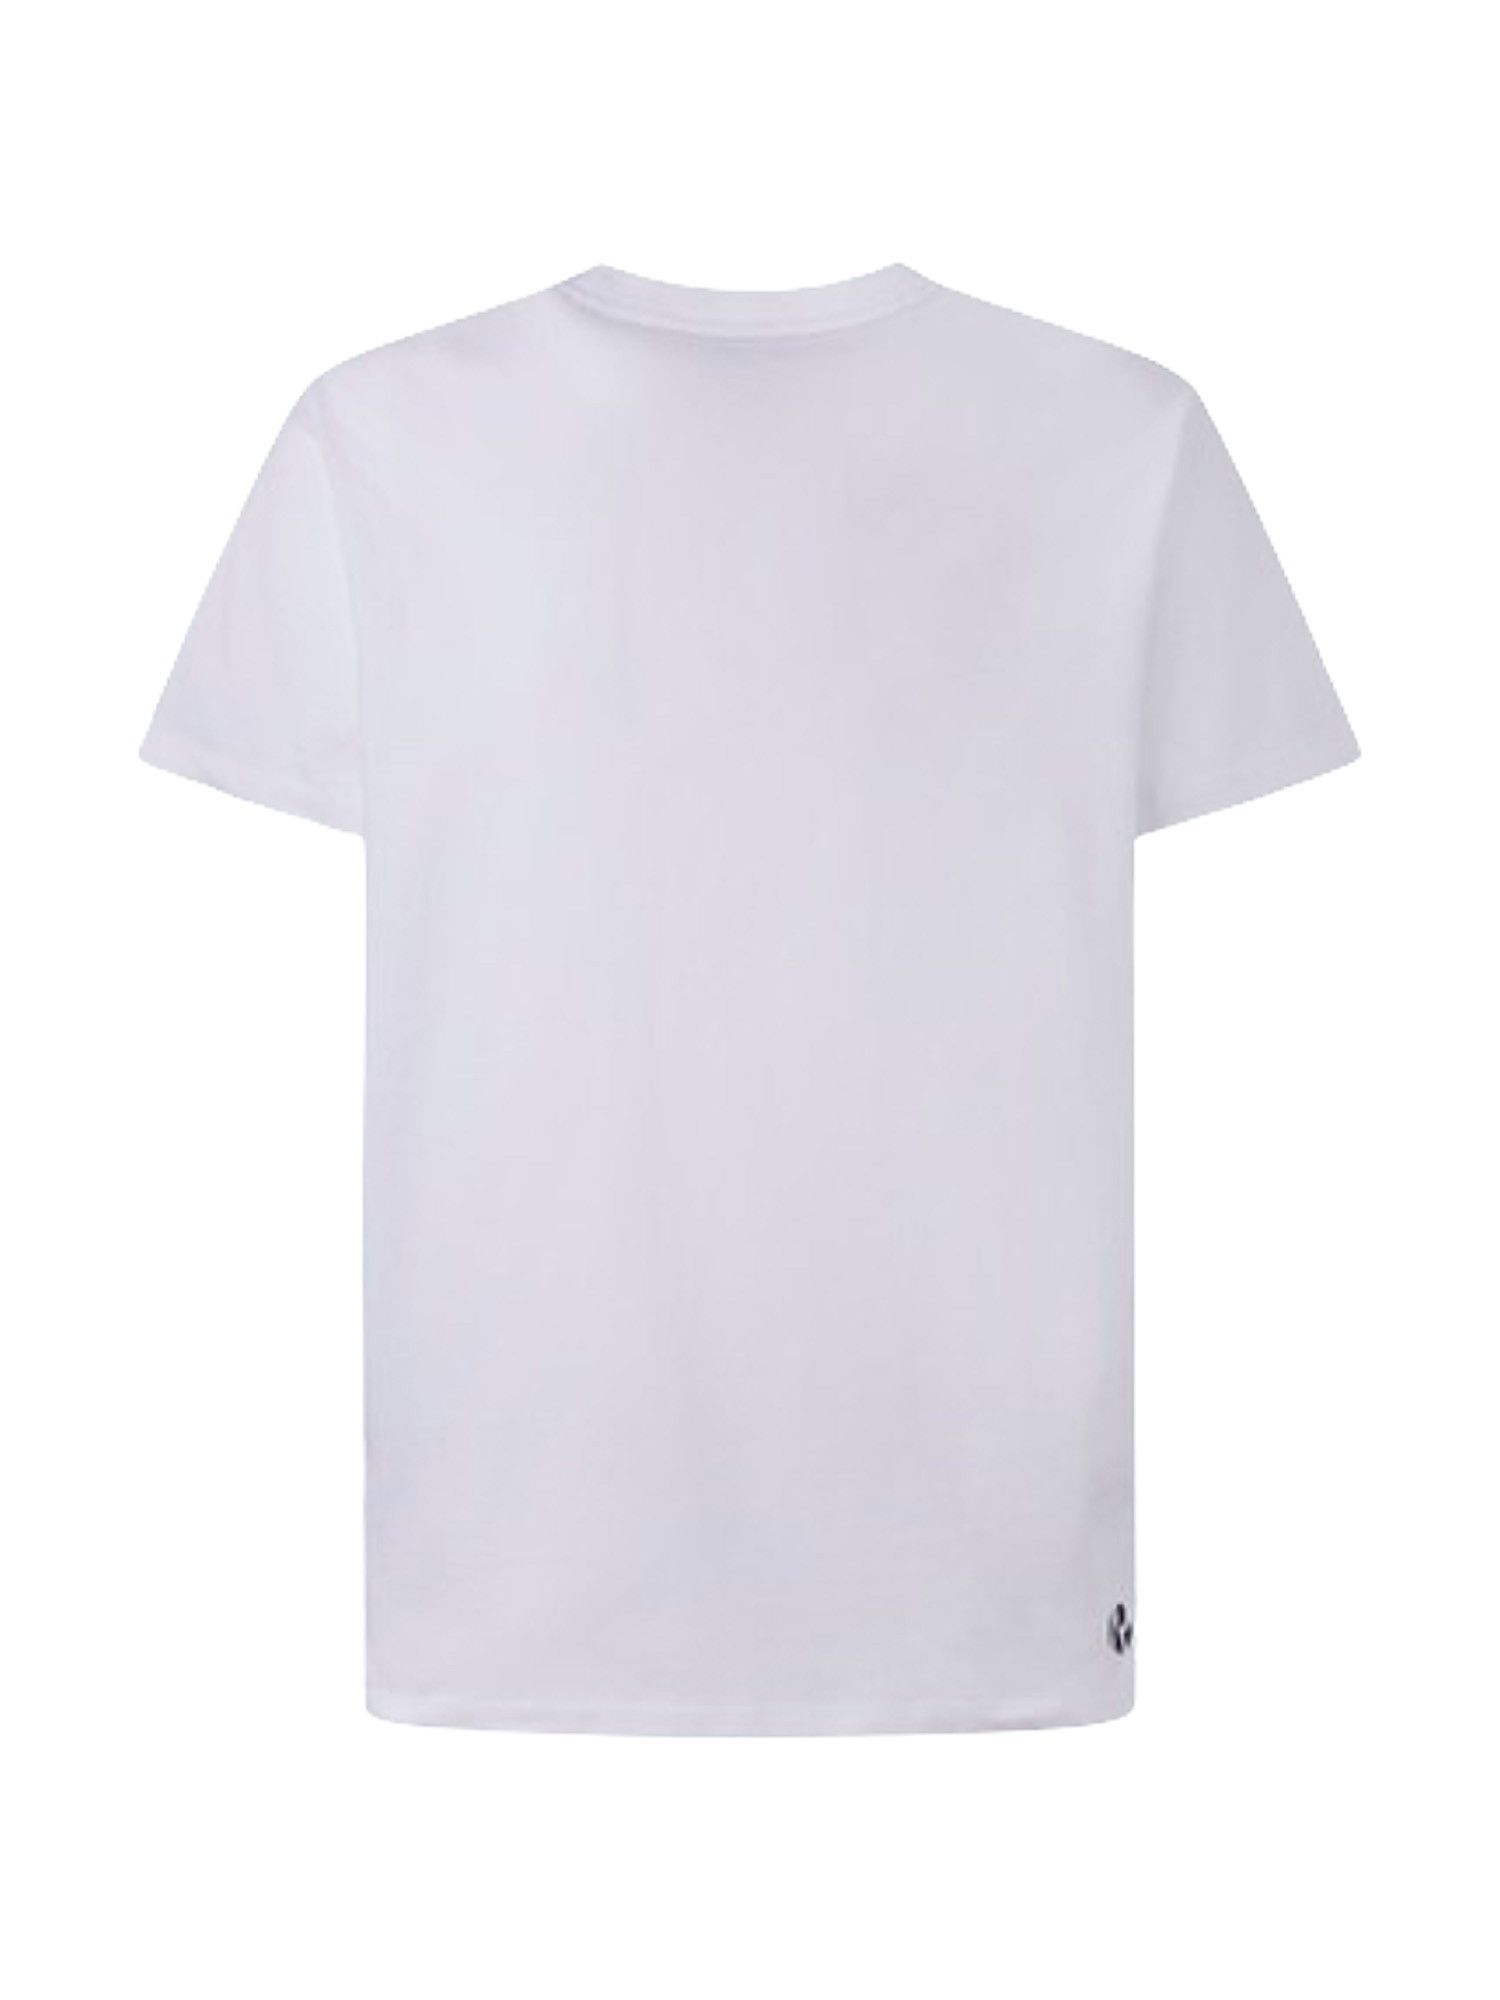 Ainsley photo print t-shirt, White, large image number 1